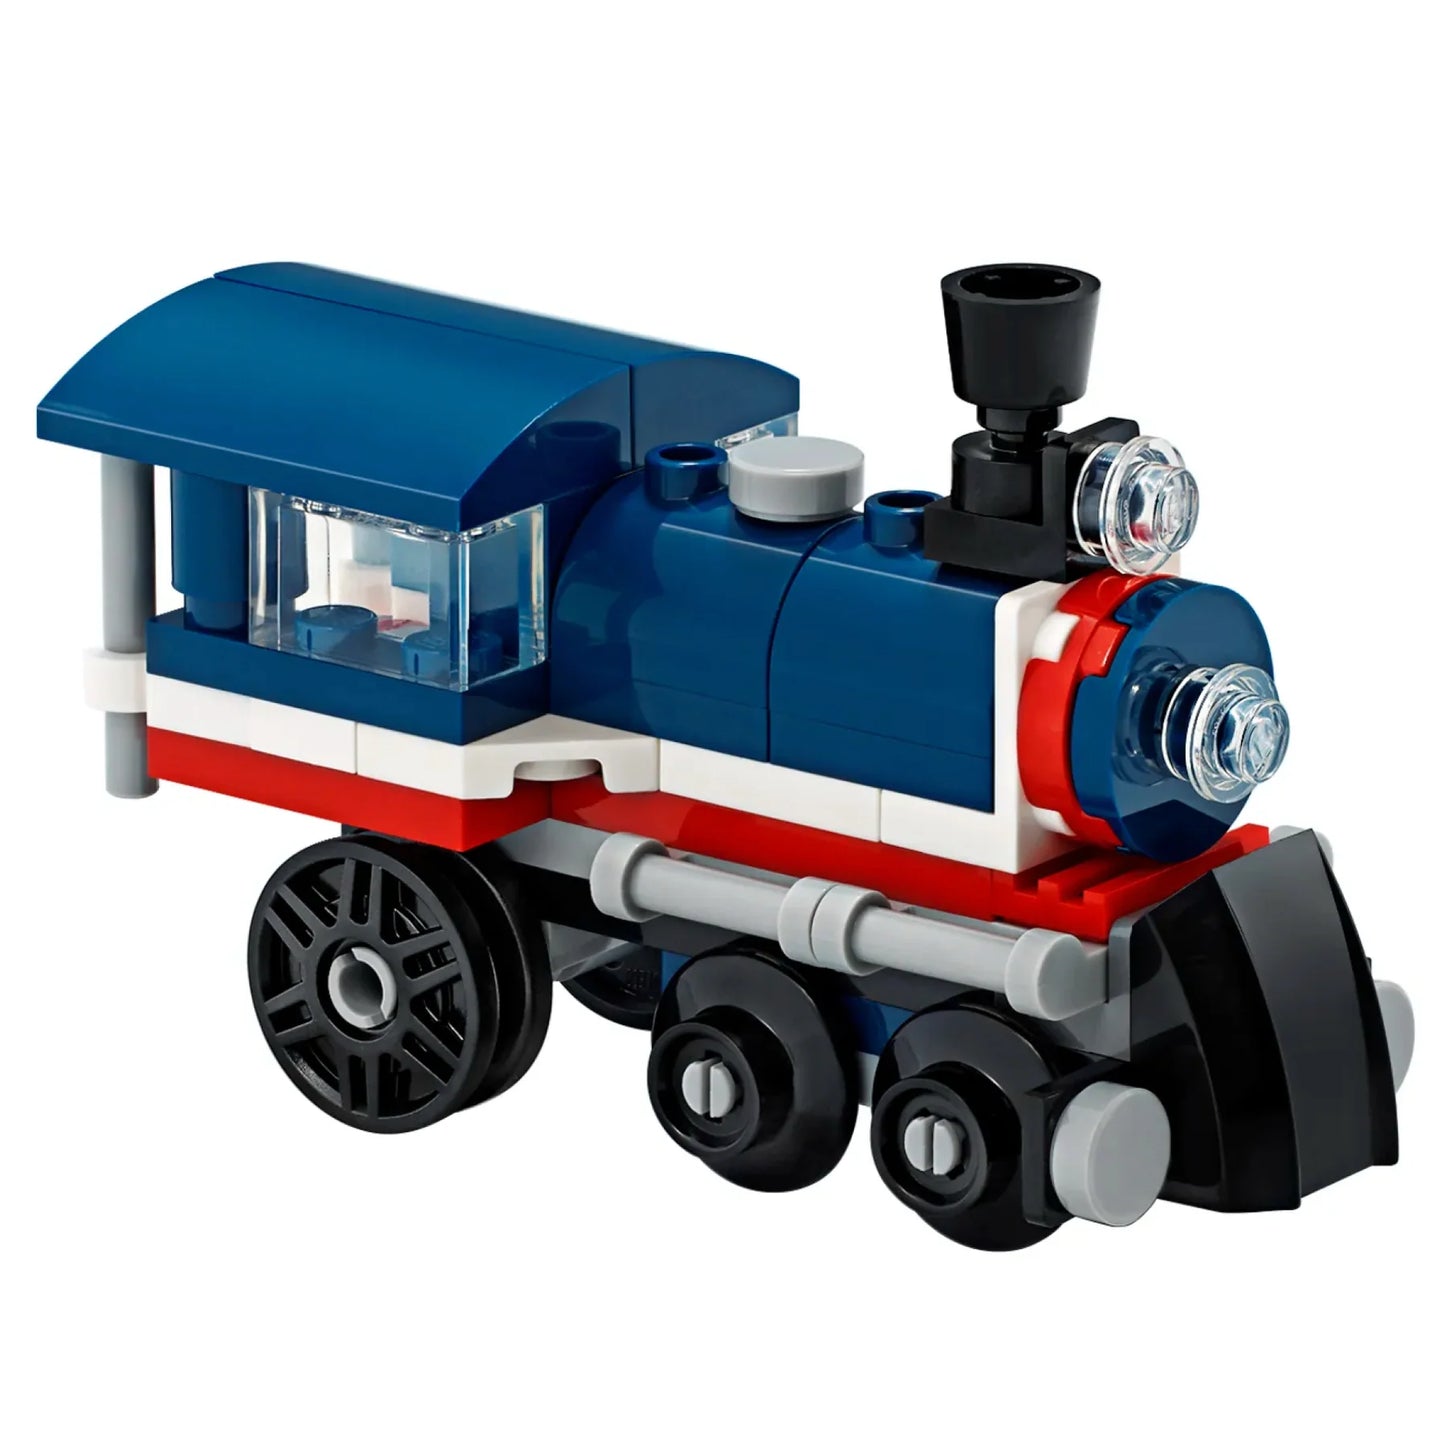 Lego Creator Train 30575 Polybag